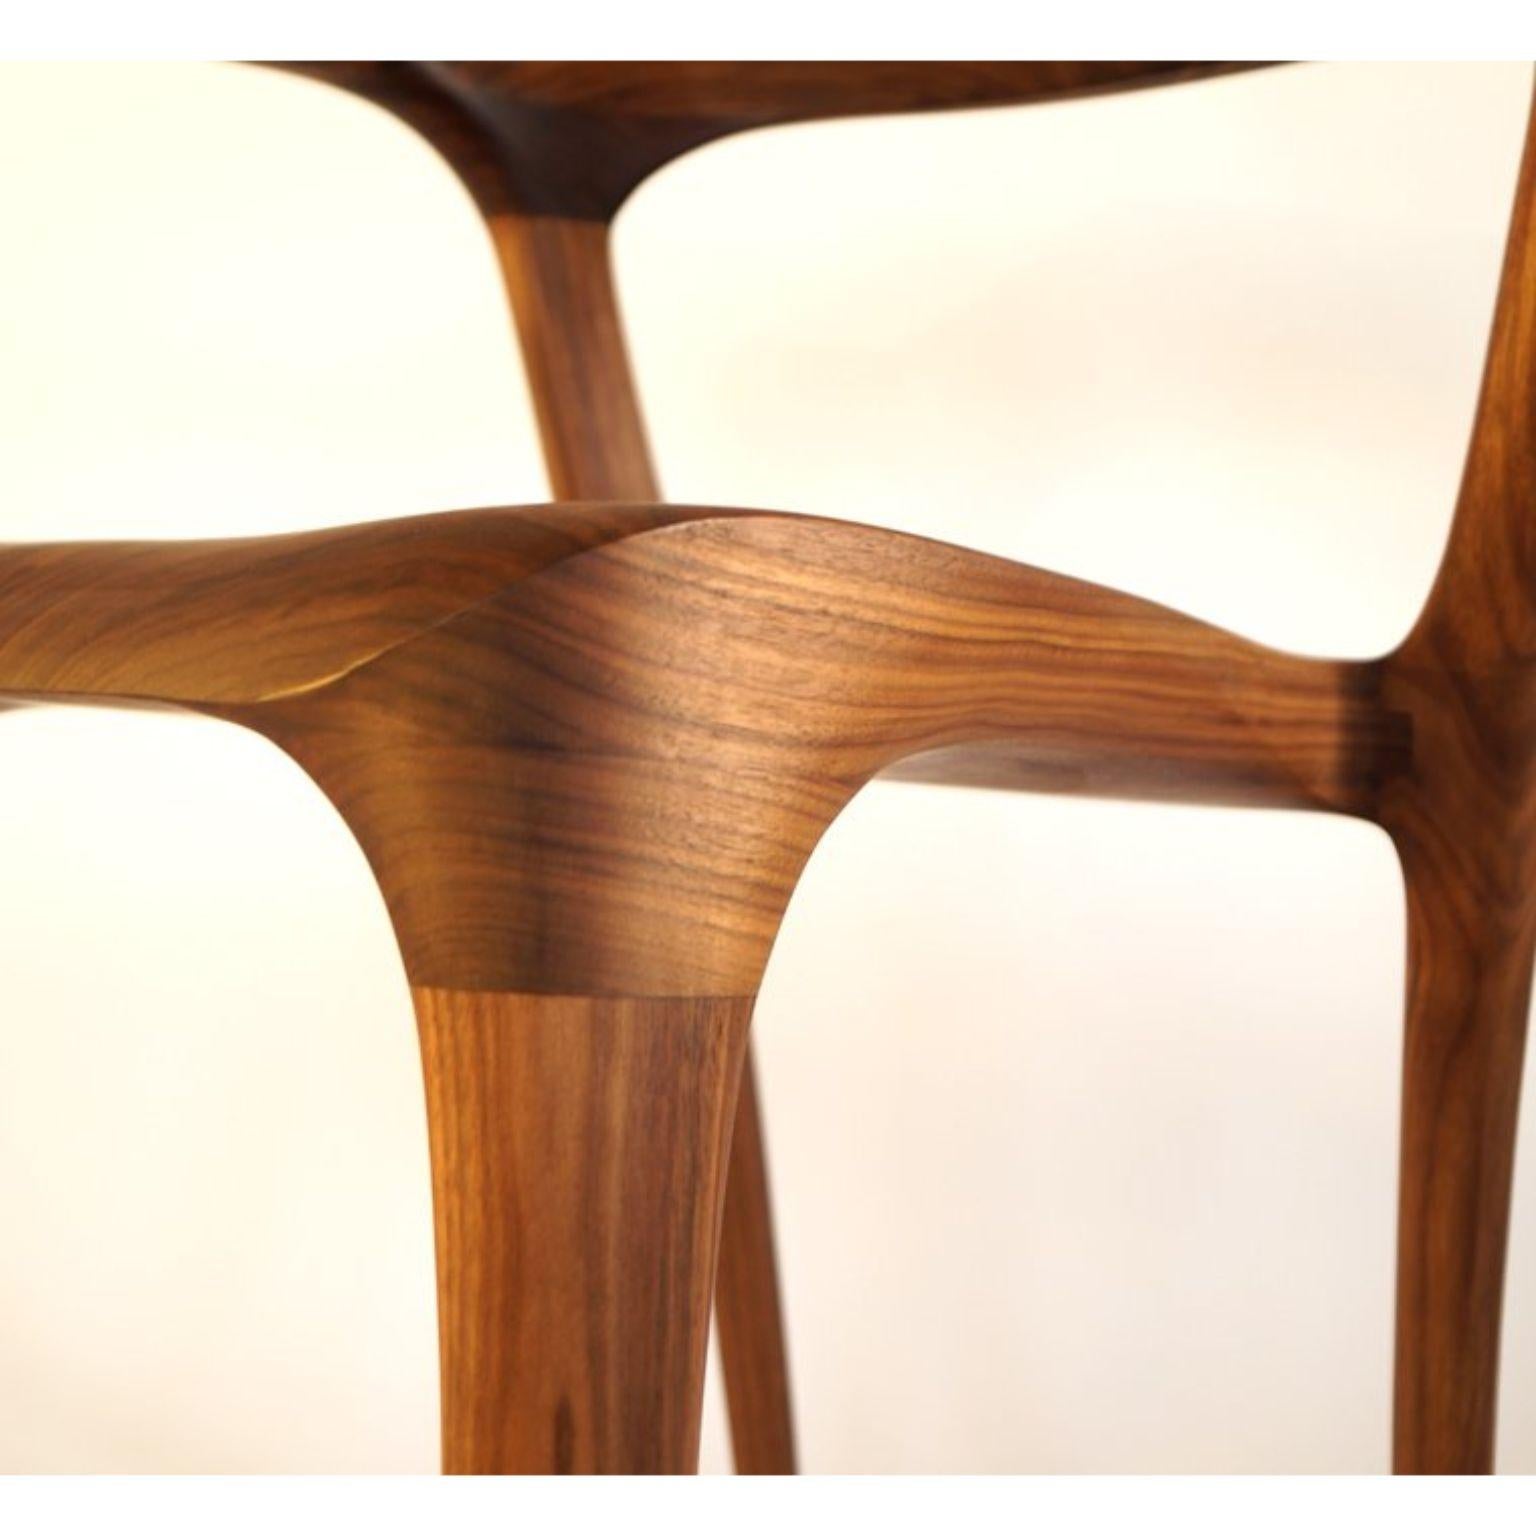 Flamingo Beak Dining Room Chair Handcrafted and Designed by Morten Stenbaek 1